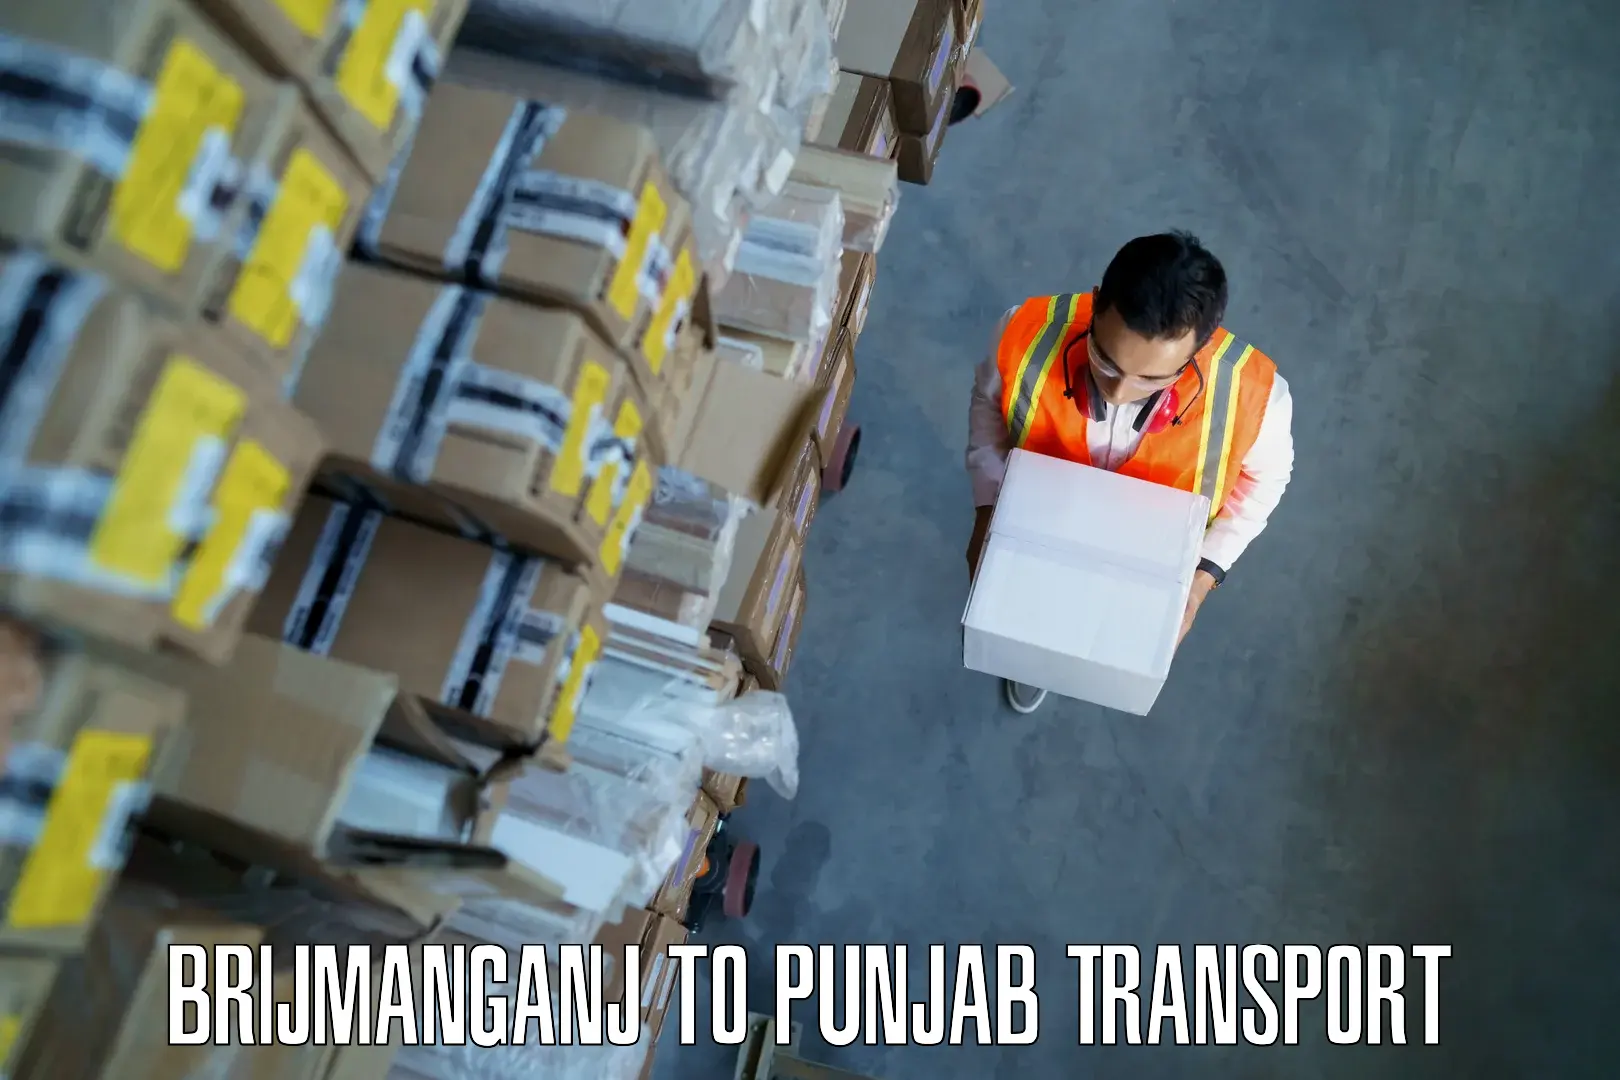 Delivery service Brijmanganj to Punjab